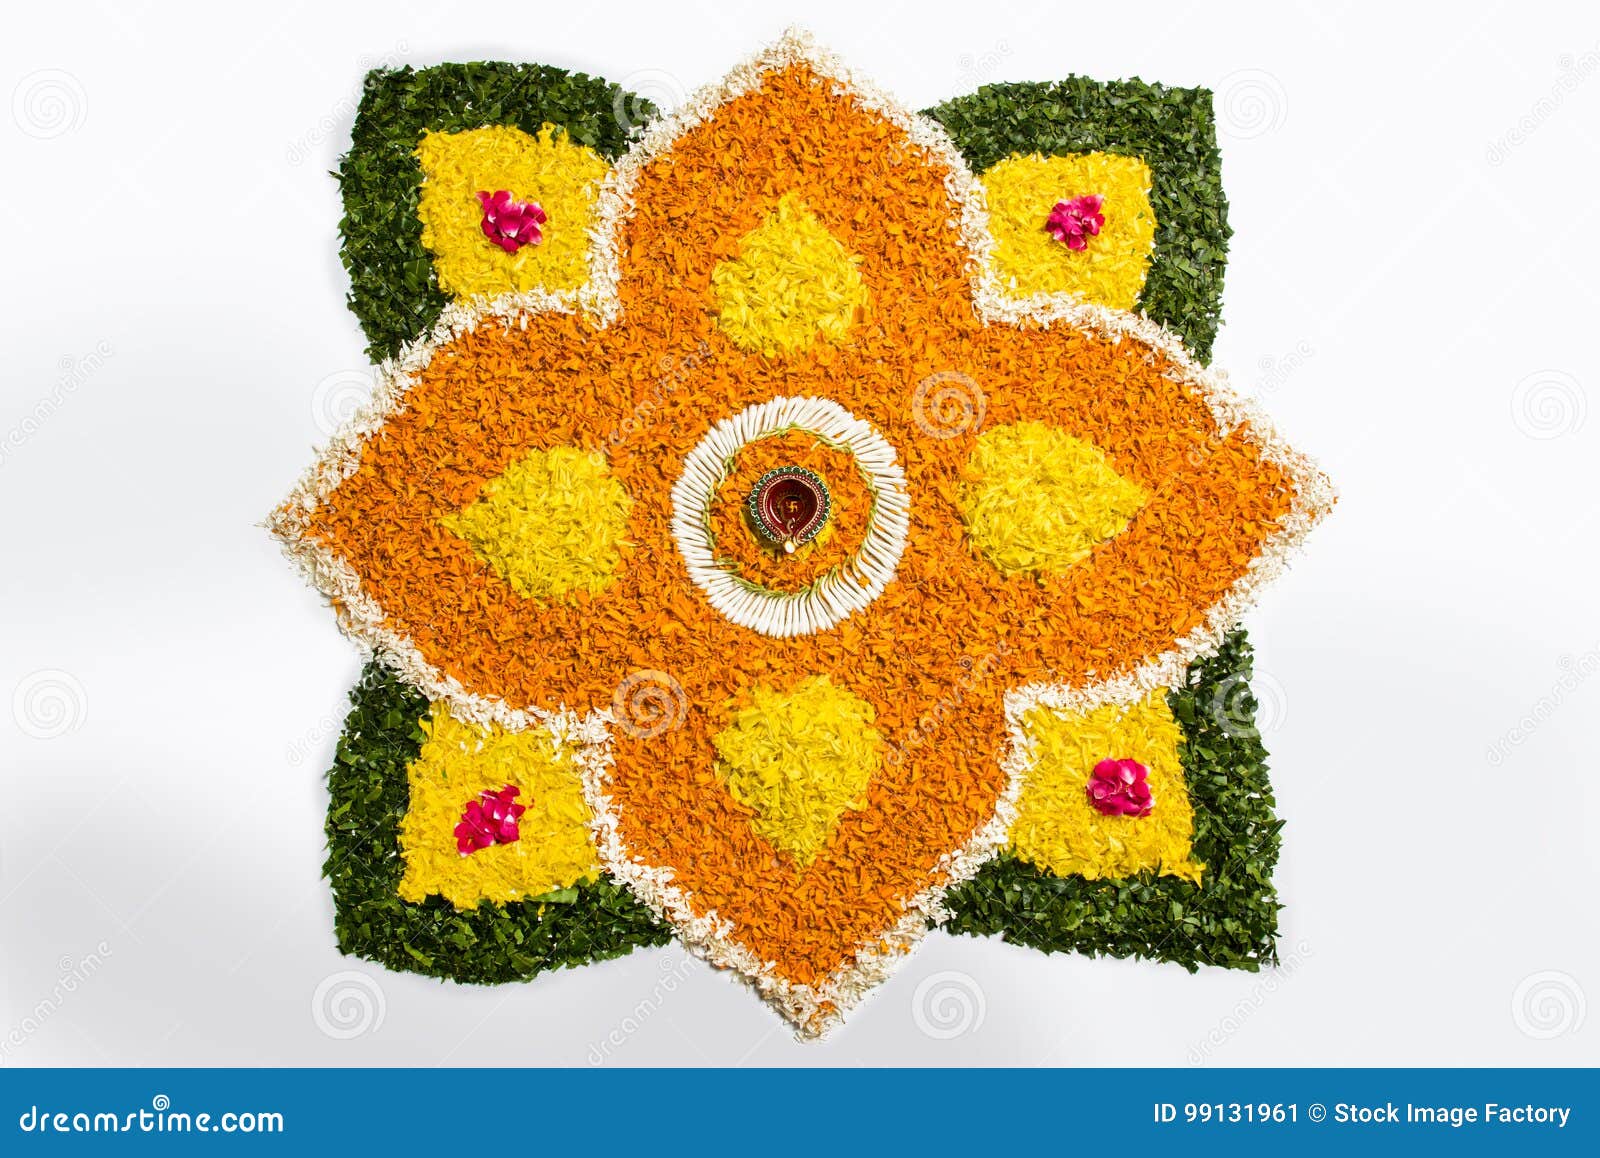 3,309 Flower Rangoli Stock Photos - Free & Royalty-Free Stock ...